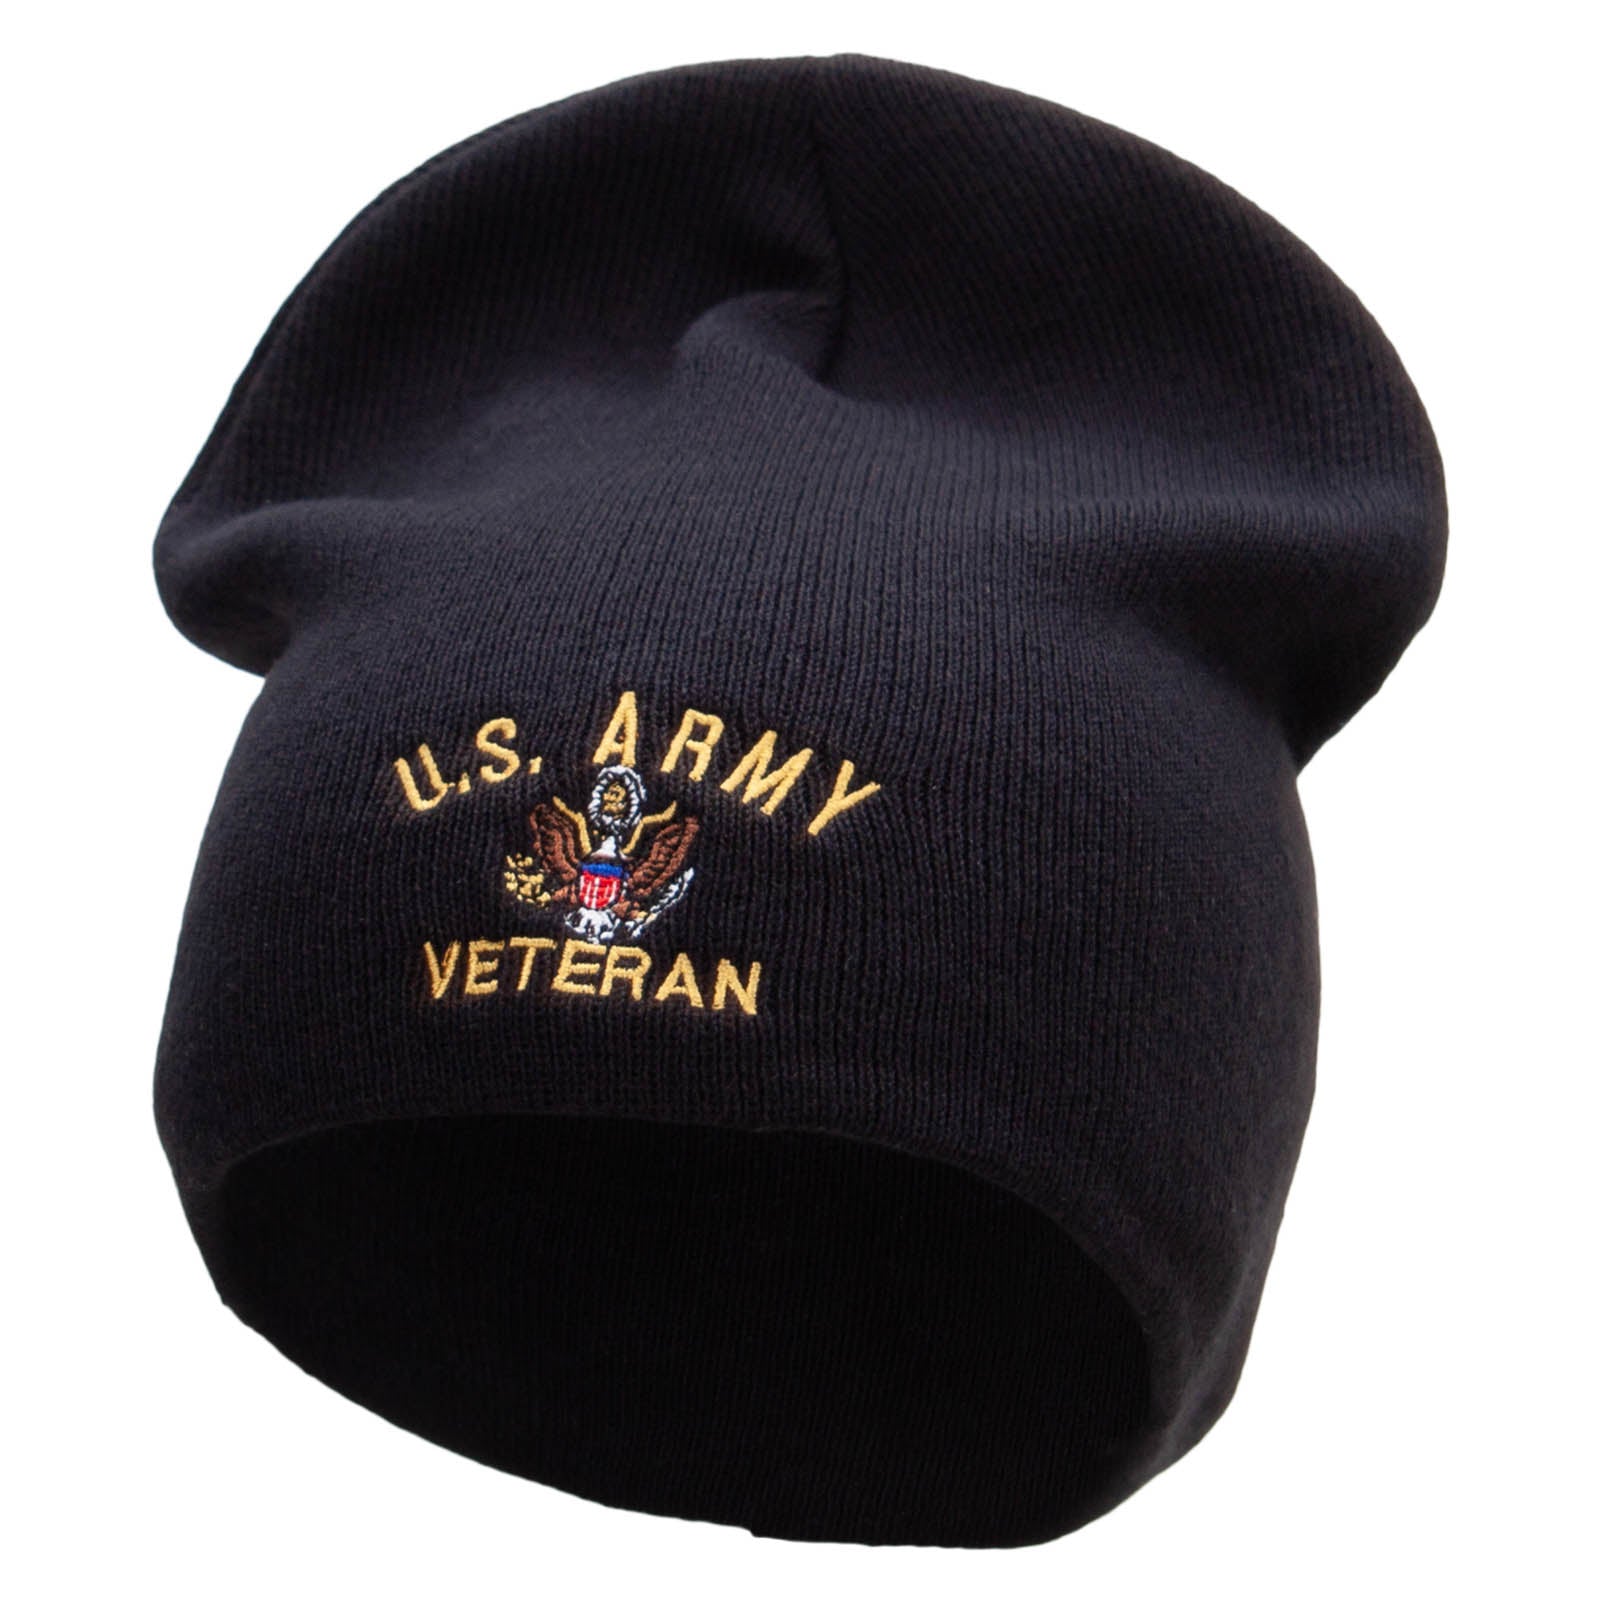 US Army Veteran Military Big Size Superior Cotton Short Knit Beanie - Black XL-3XL